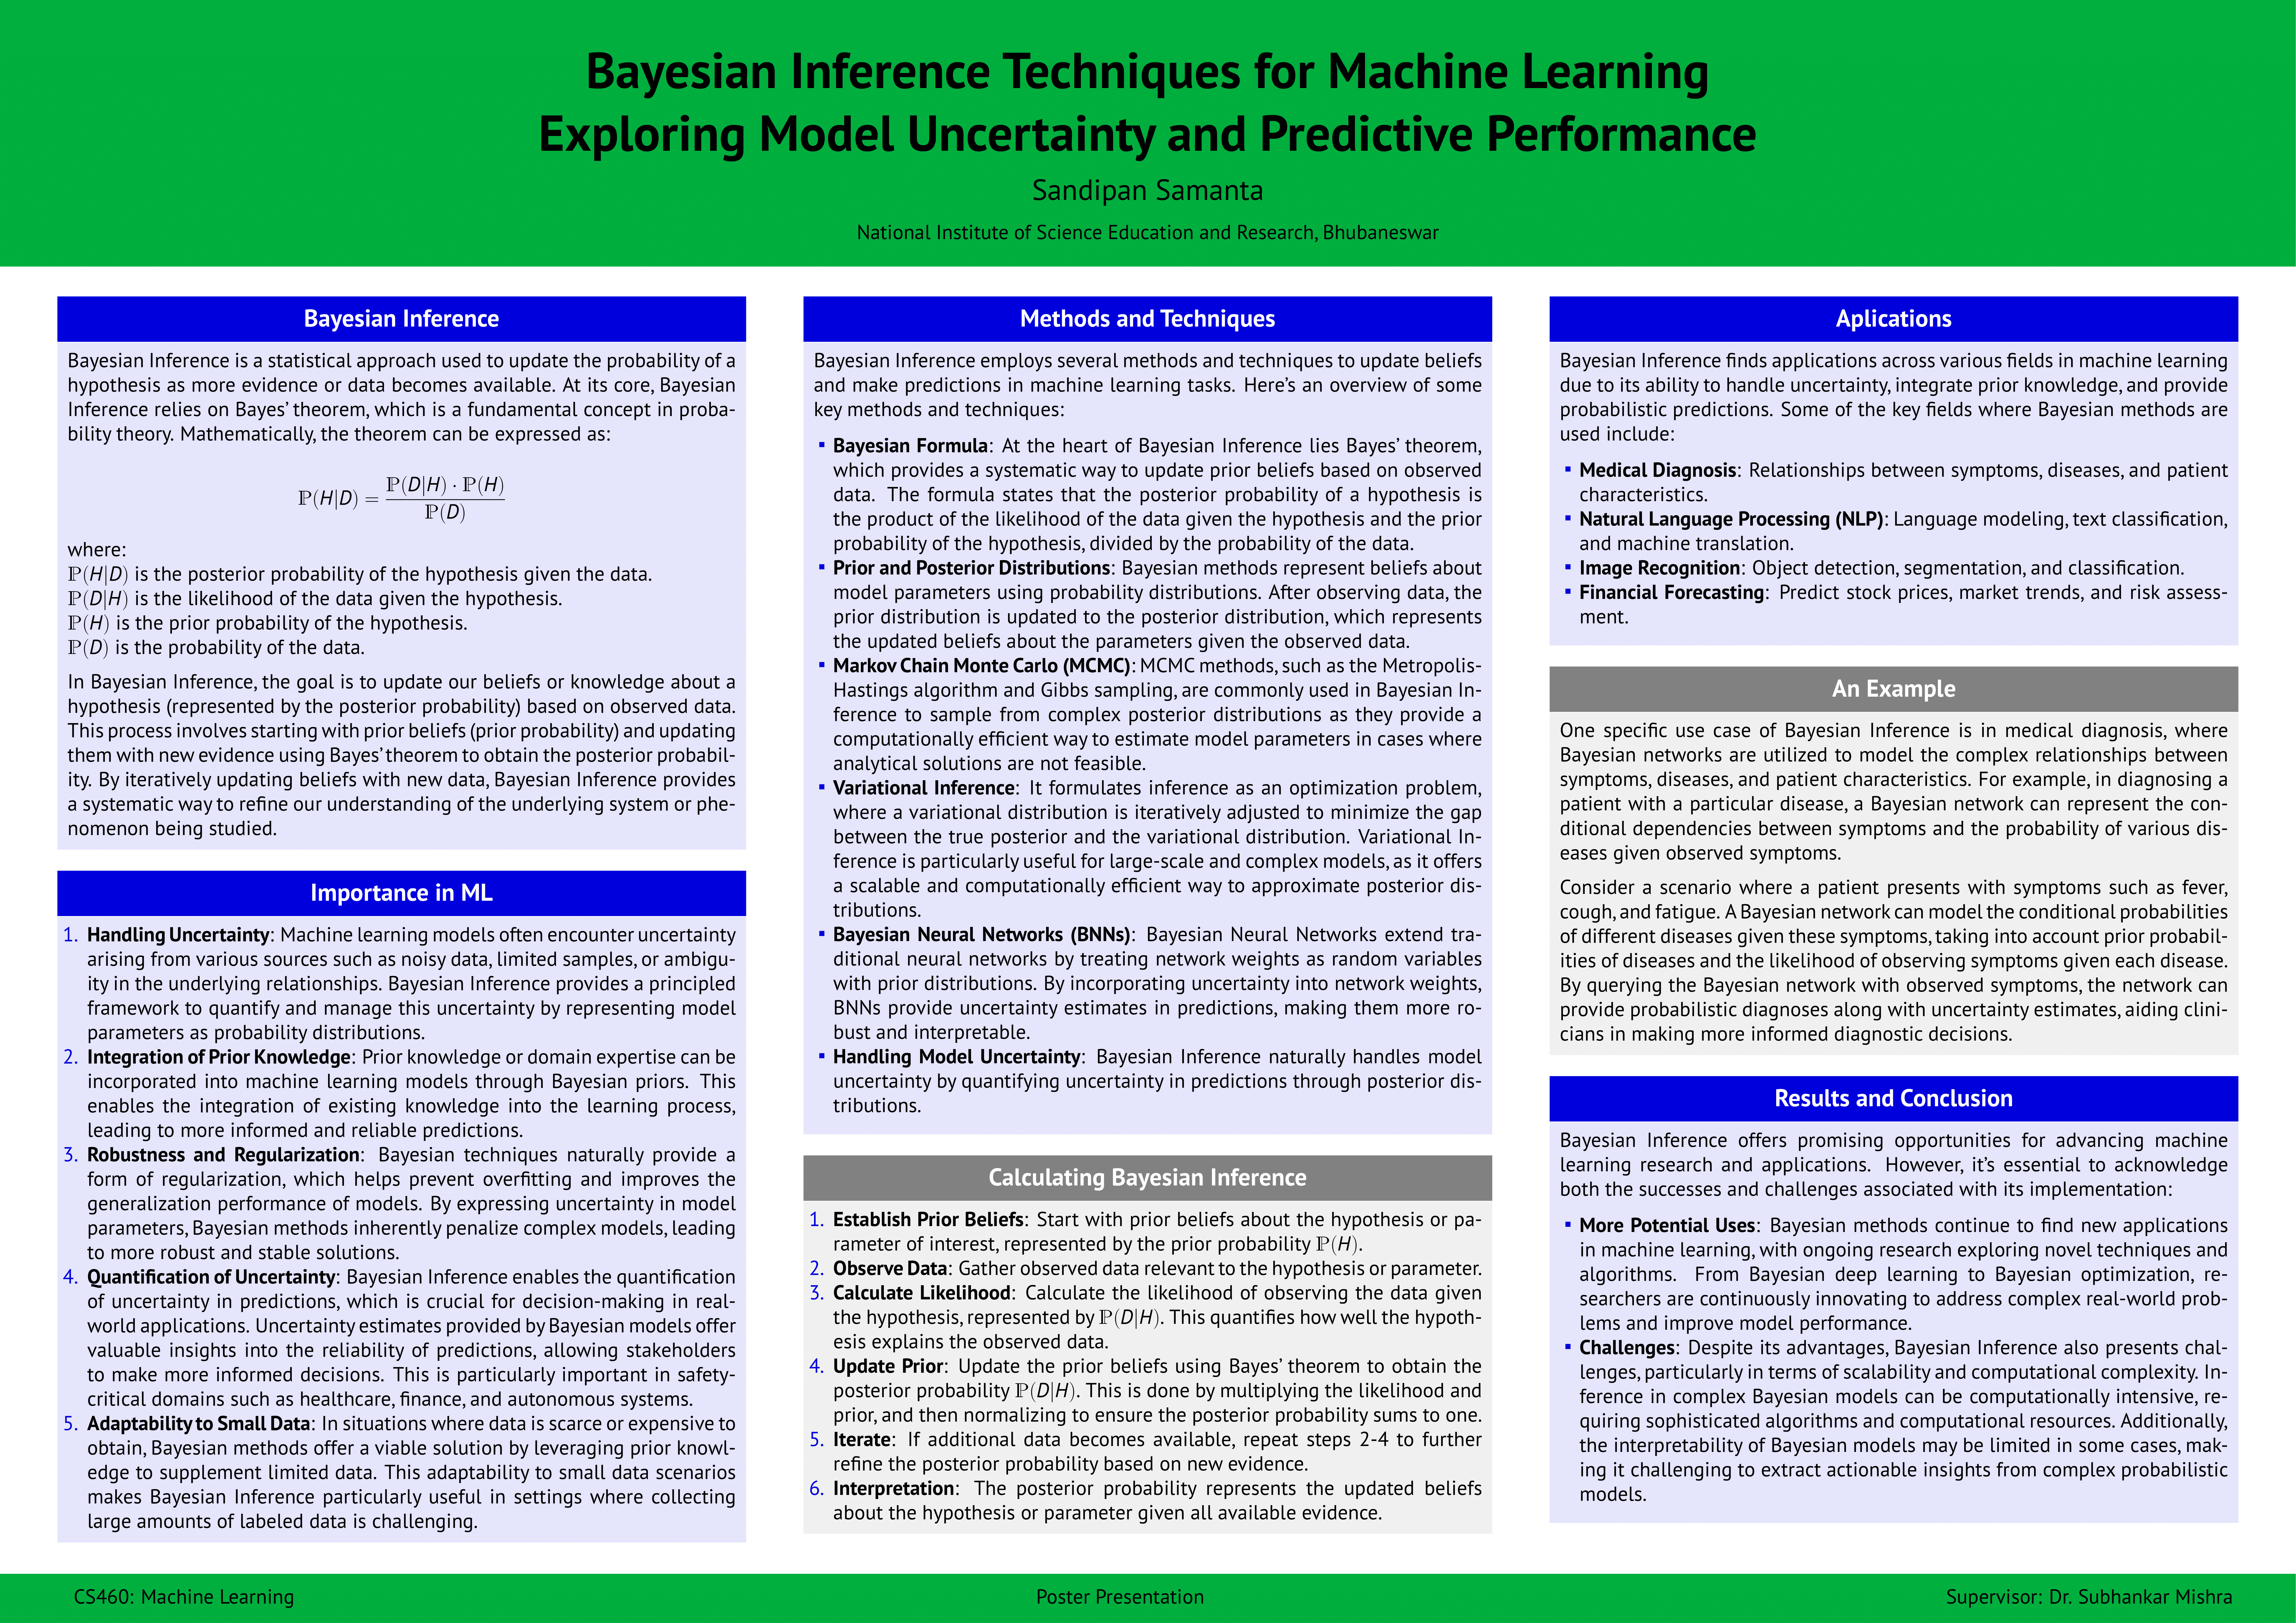 Sandipan_Bayesian_Inference